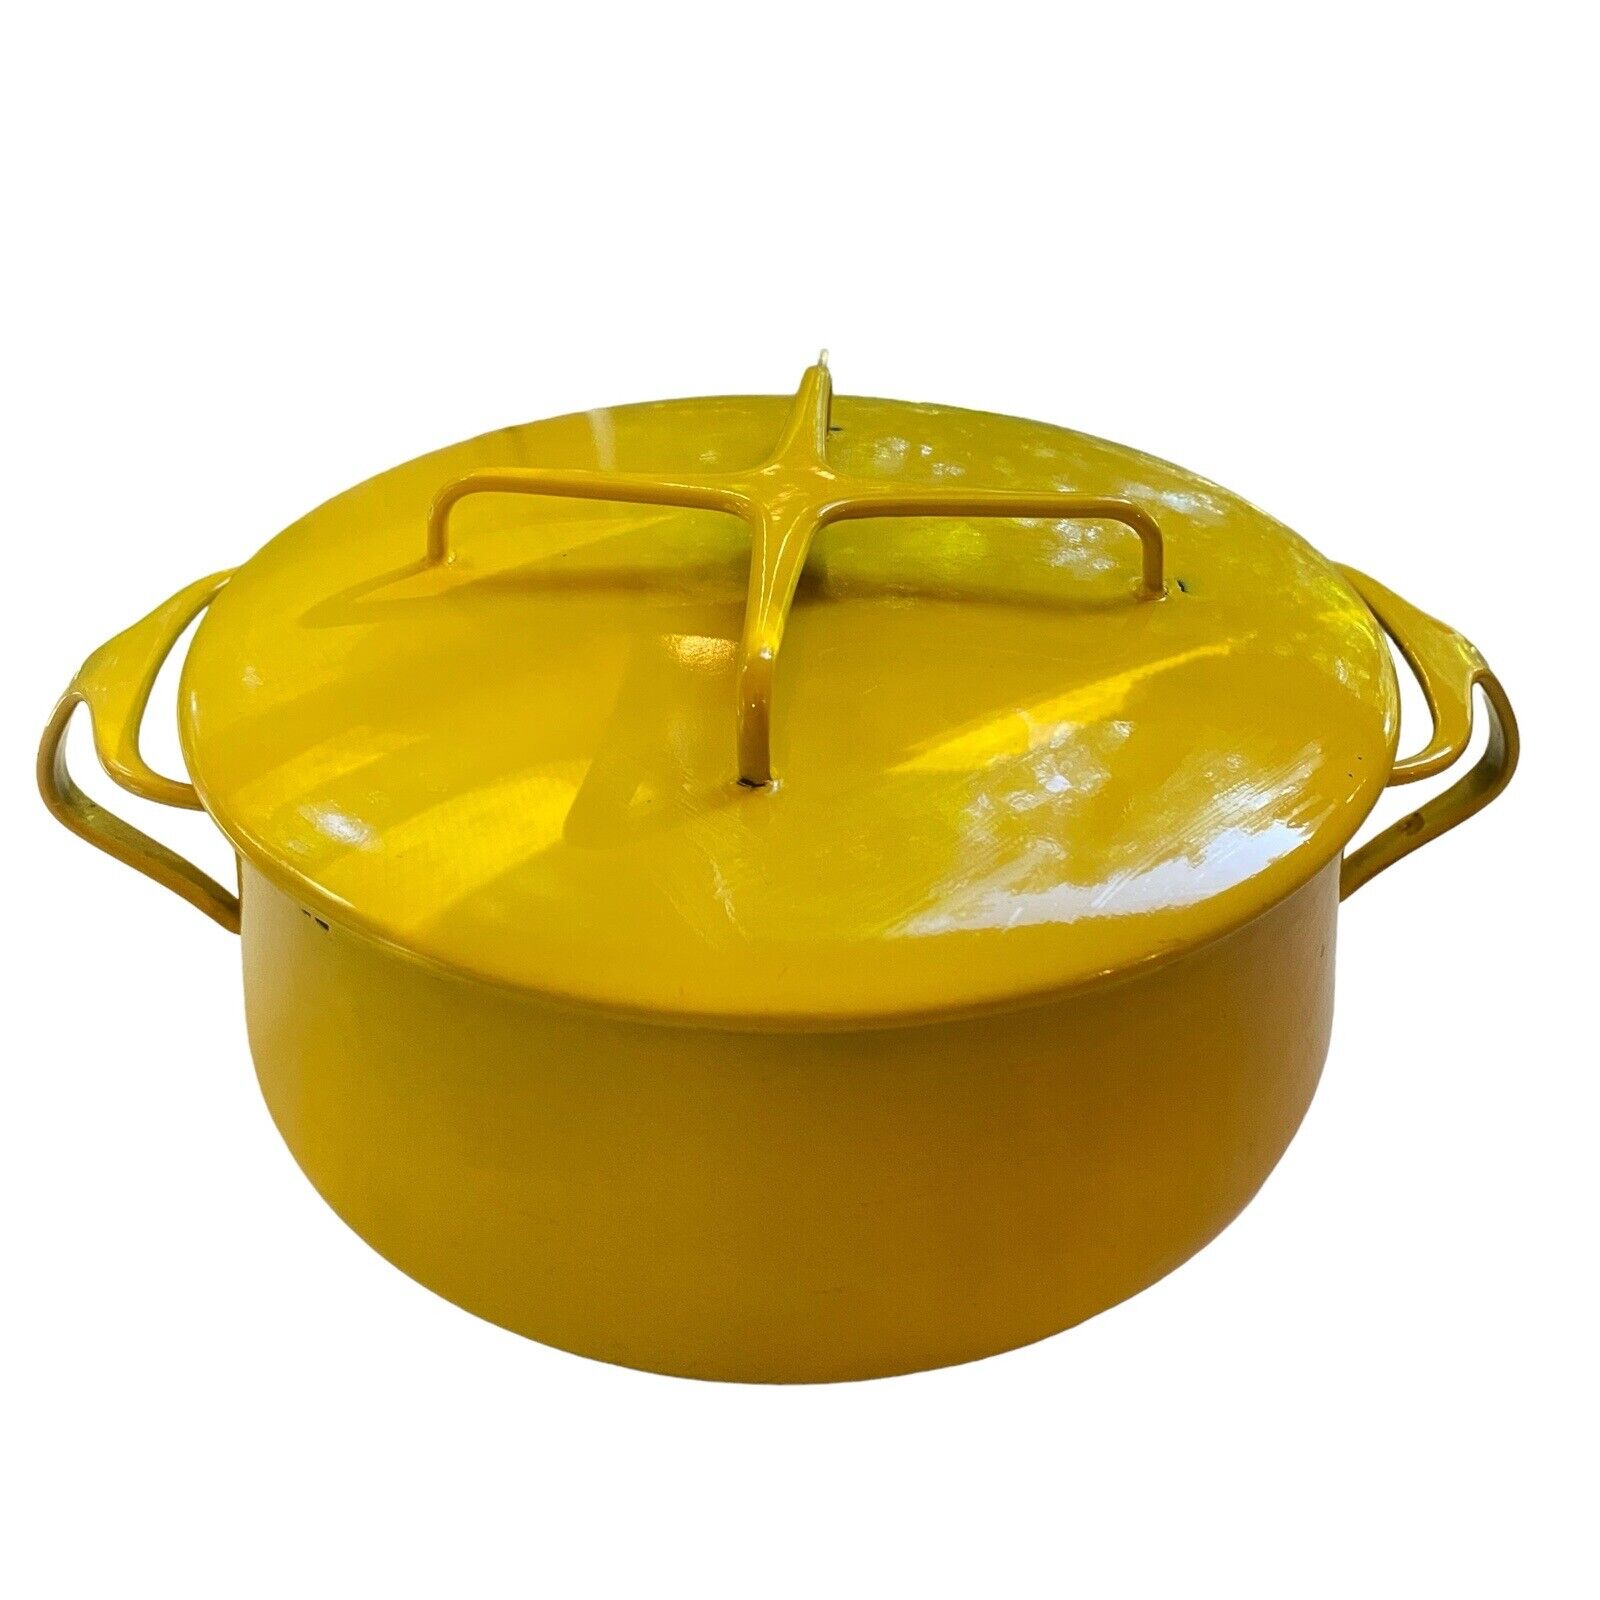 Vintage Dansk Dutch Oven Kobenstyle Yellow Enamel Lid 3 Qt IHQ France FLAWED